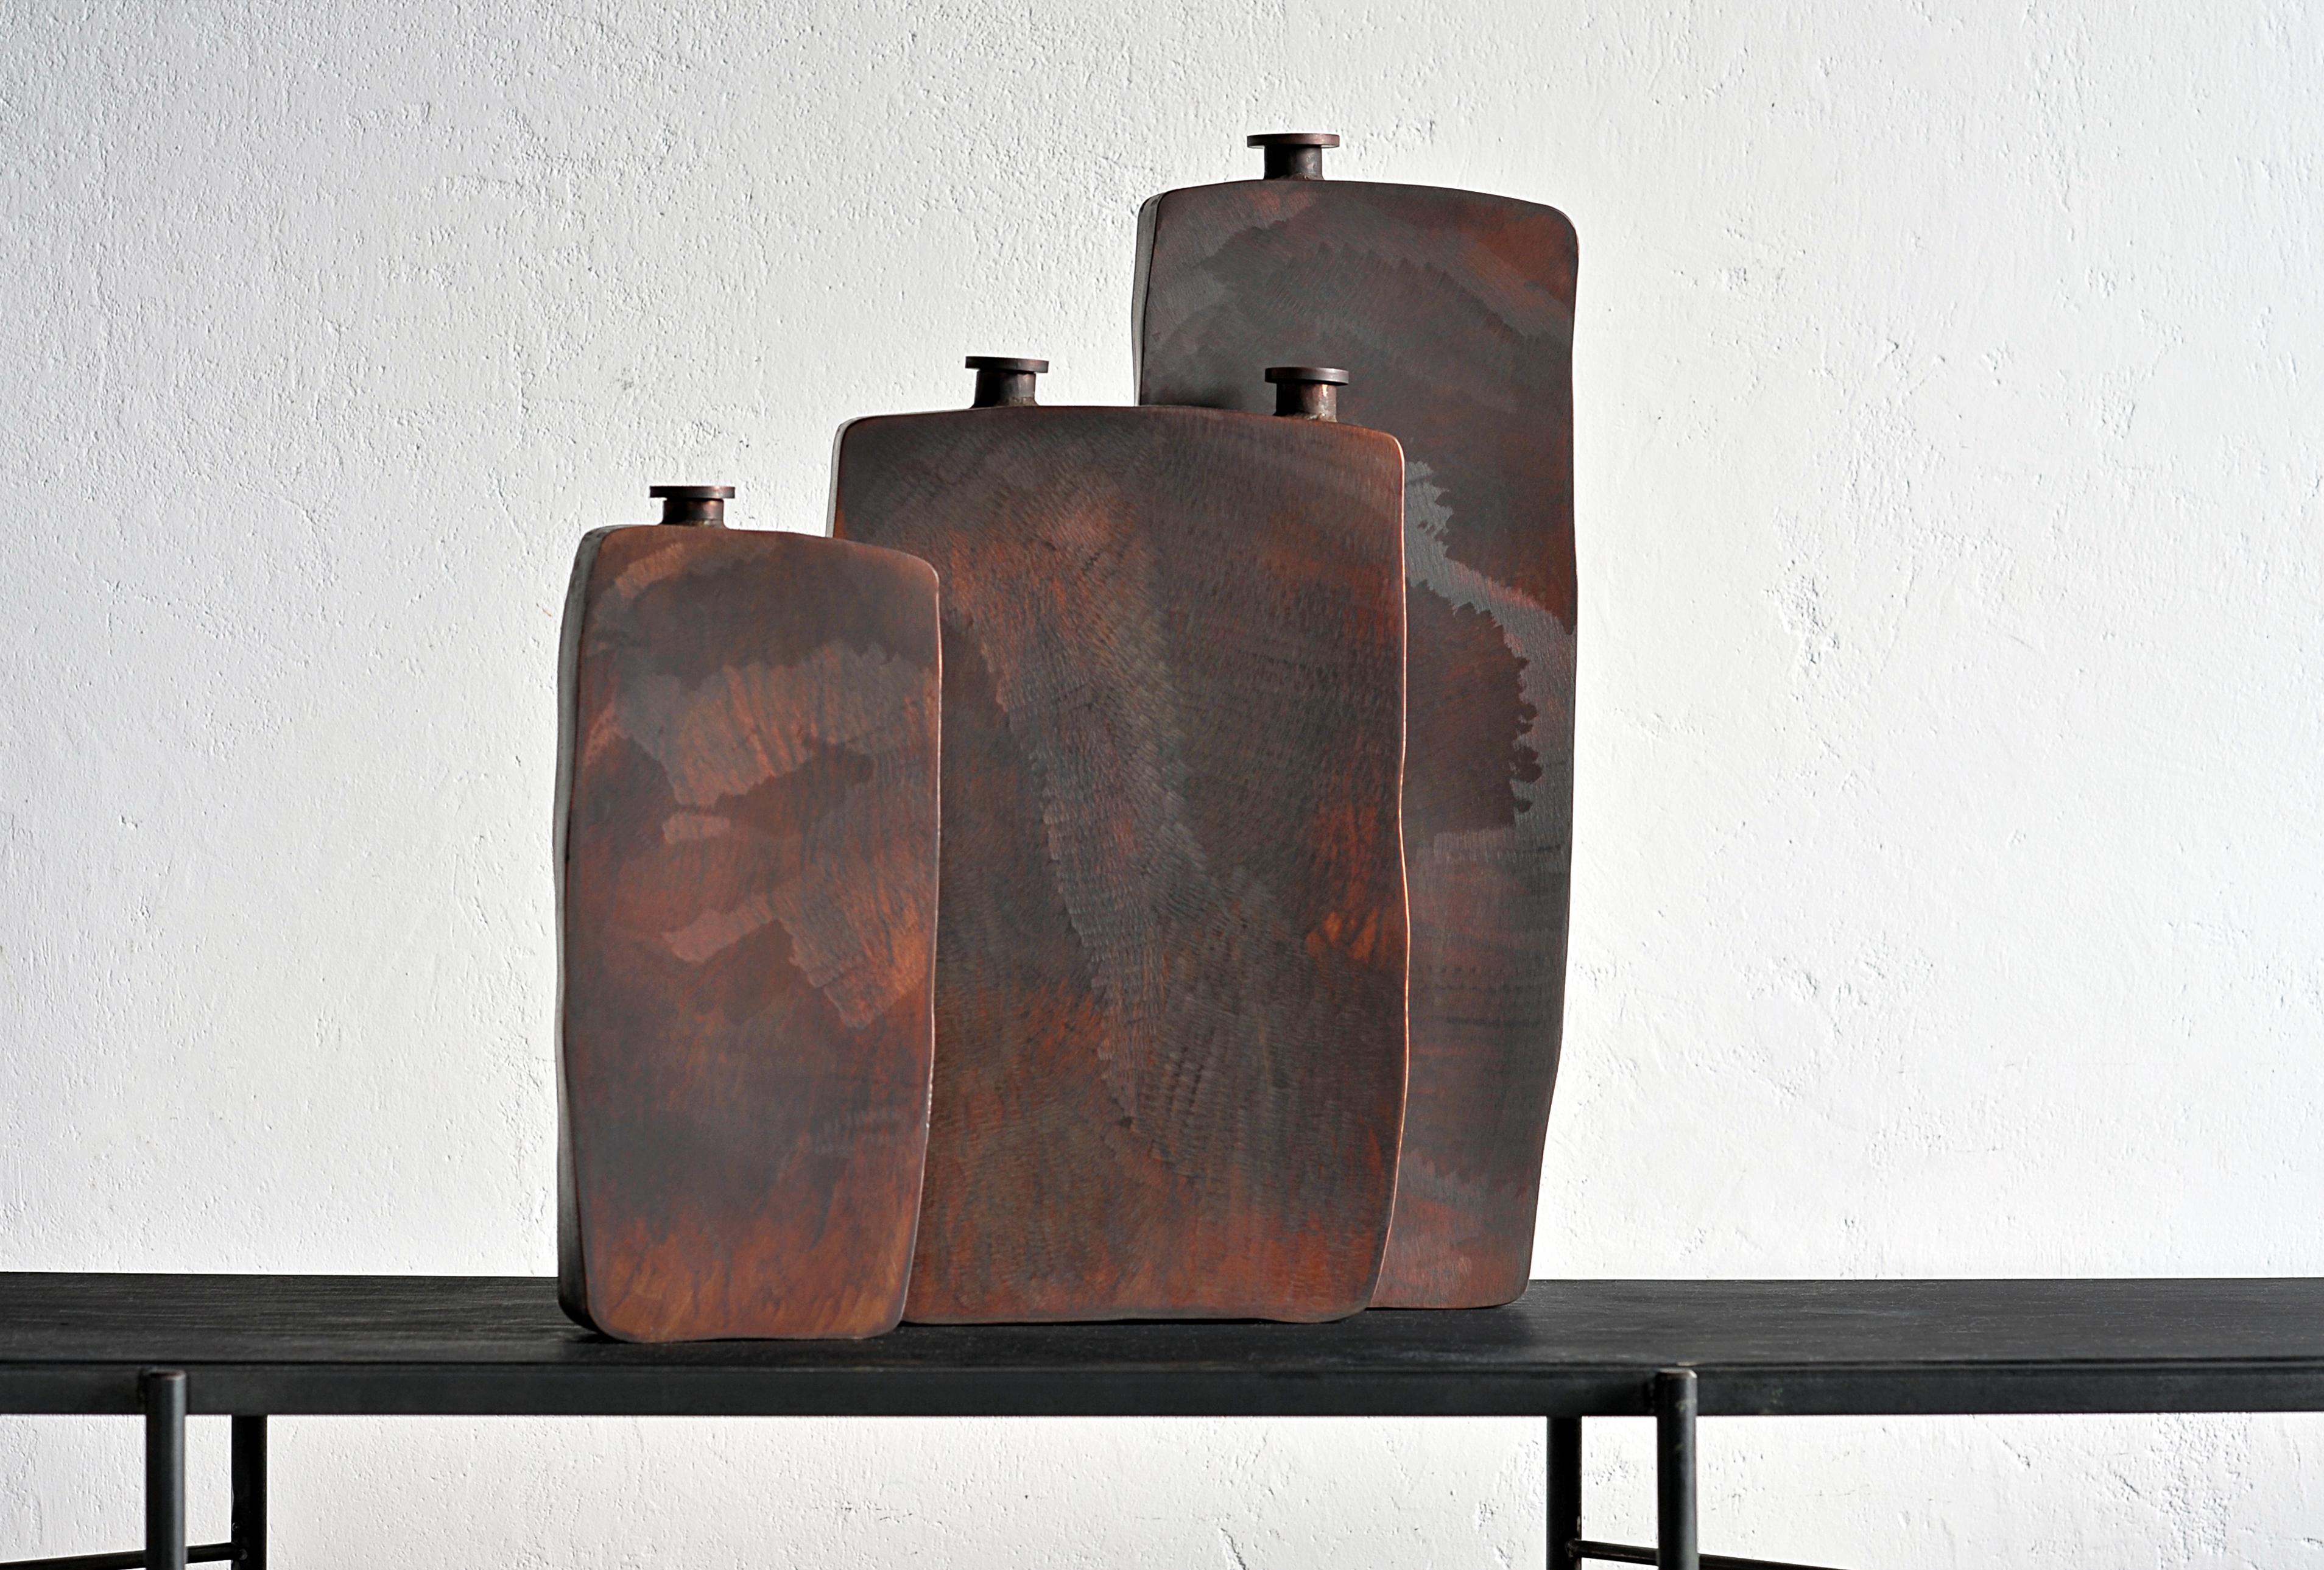 Ensemble of three brown bottles by Lukasz Friedrich
Dimensions: Small bottle 15 x 5 x H 34 cm
Medium bottle 24 x 5.5 x H 40 cm
Large bottle 19.5 x 4.5 x H 50 cm
Materials: Patinated steel.